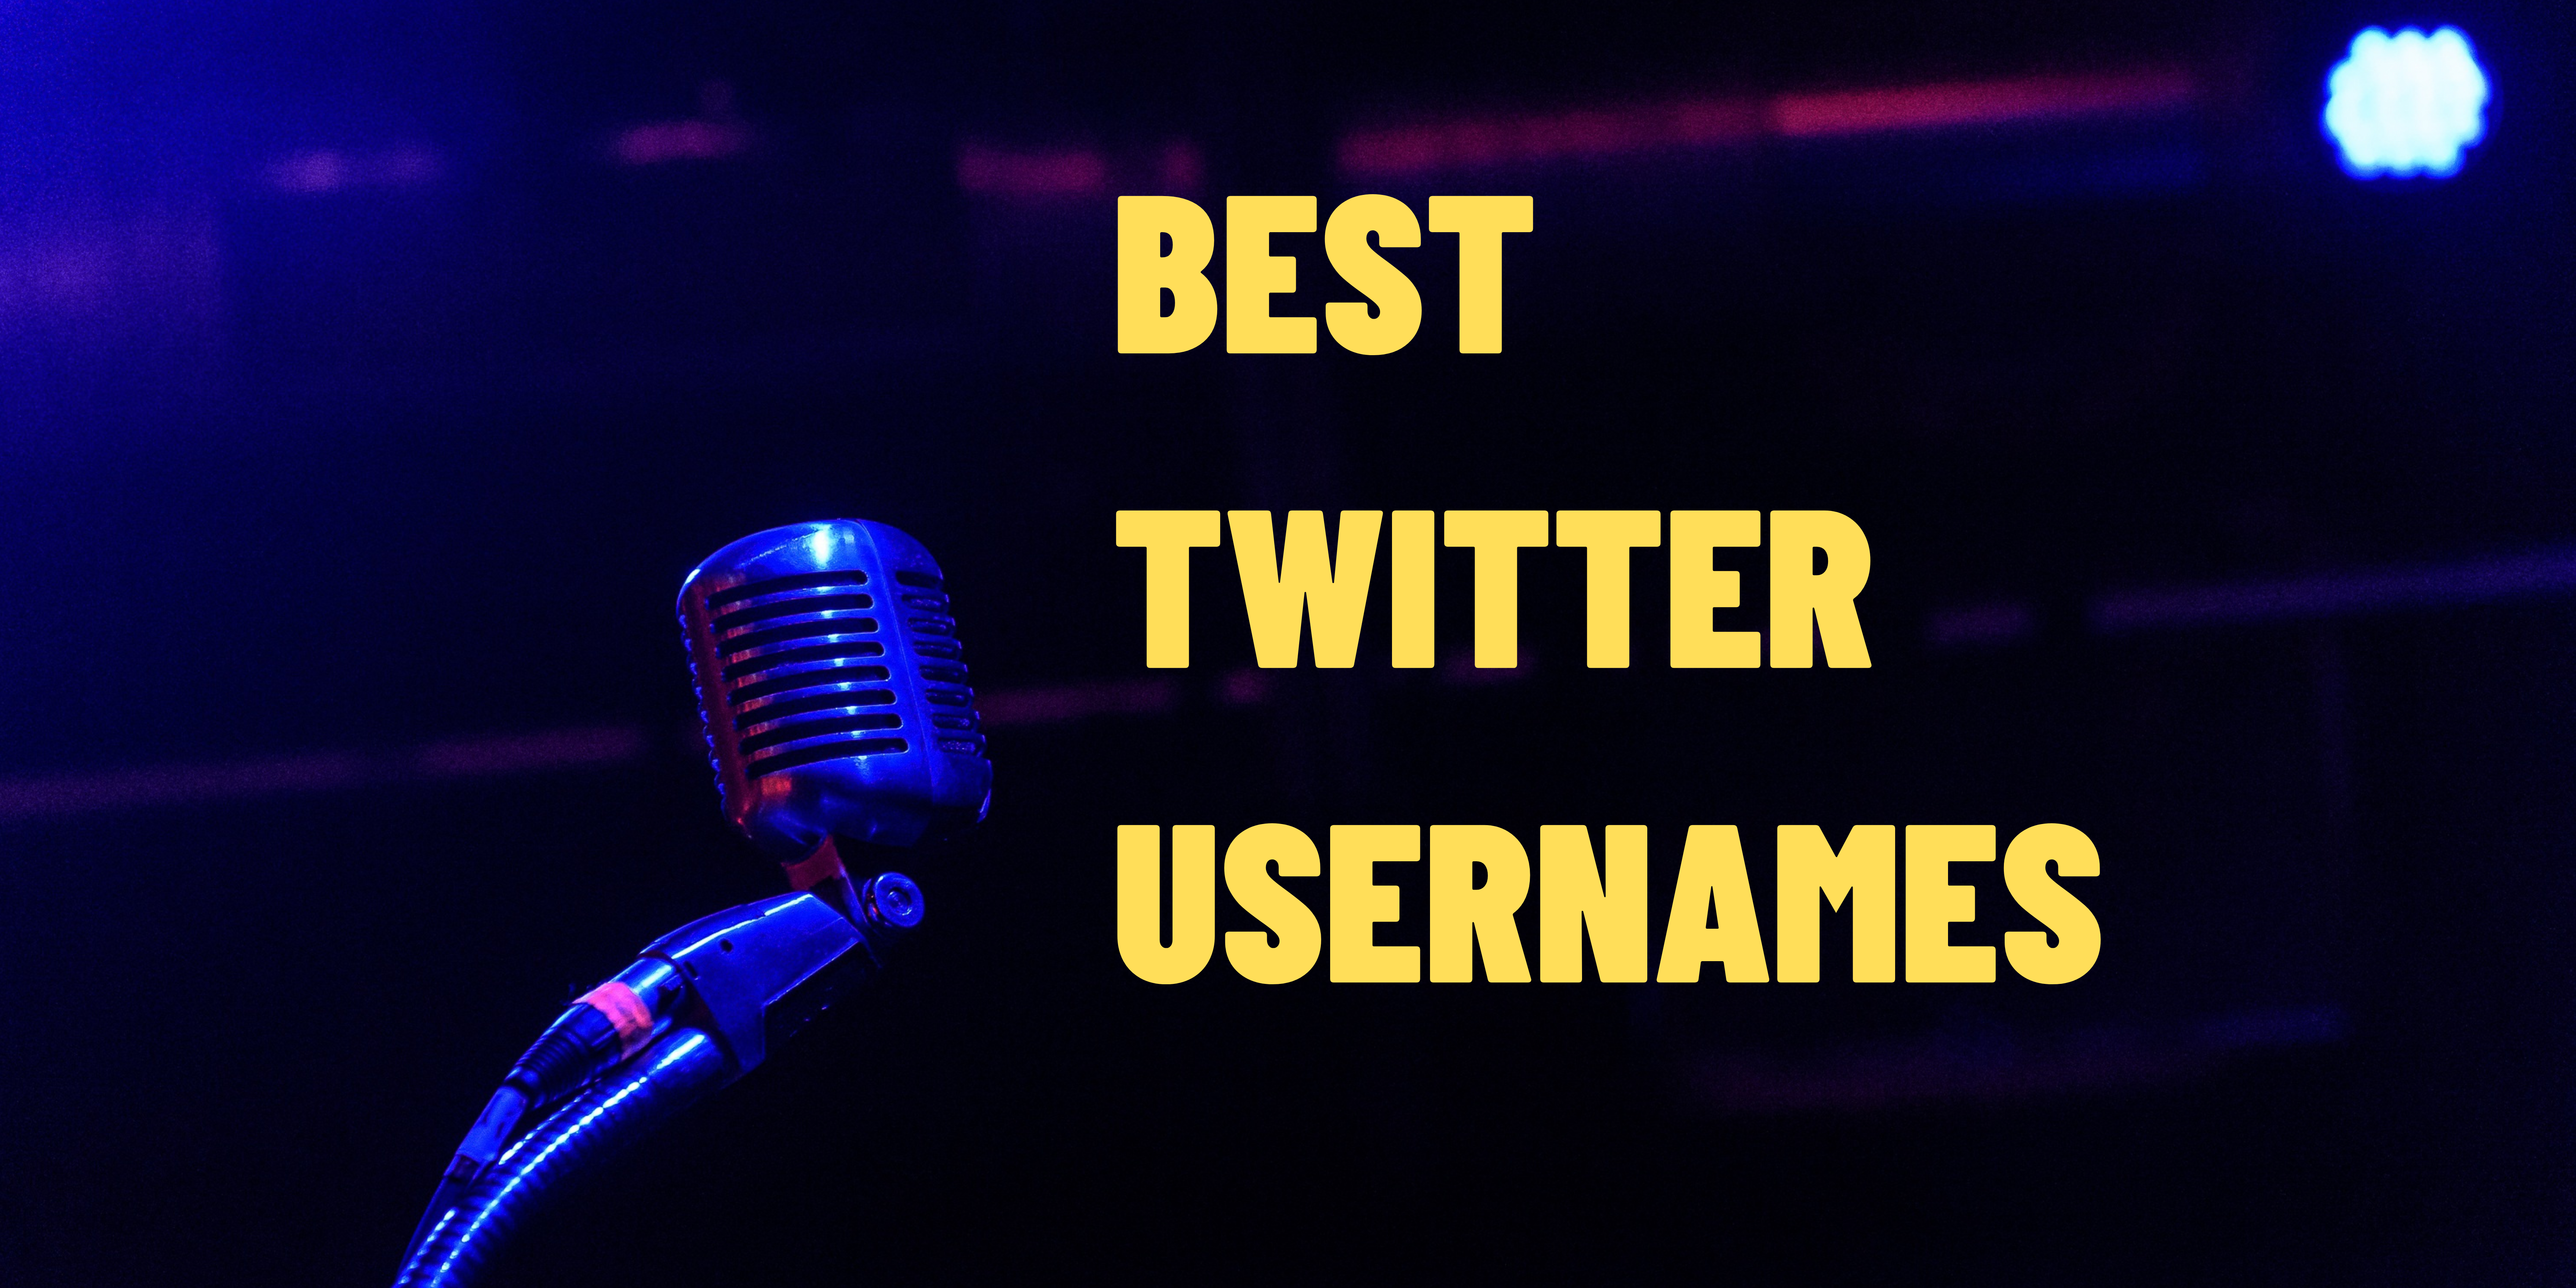 Best Twitter Username Tips and Generators